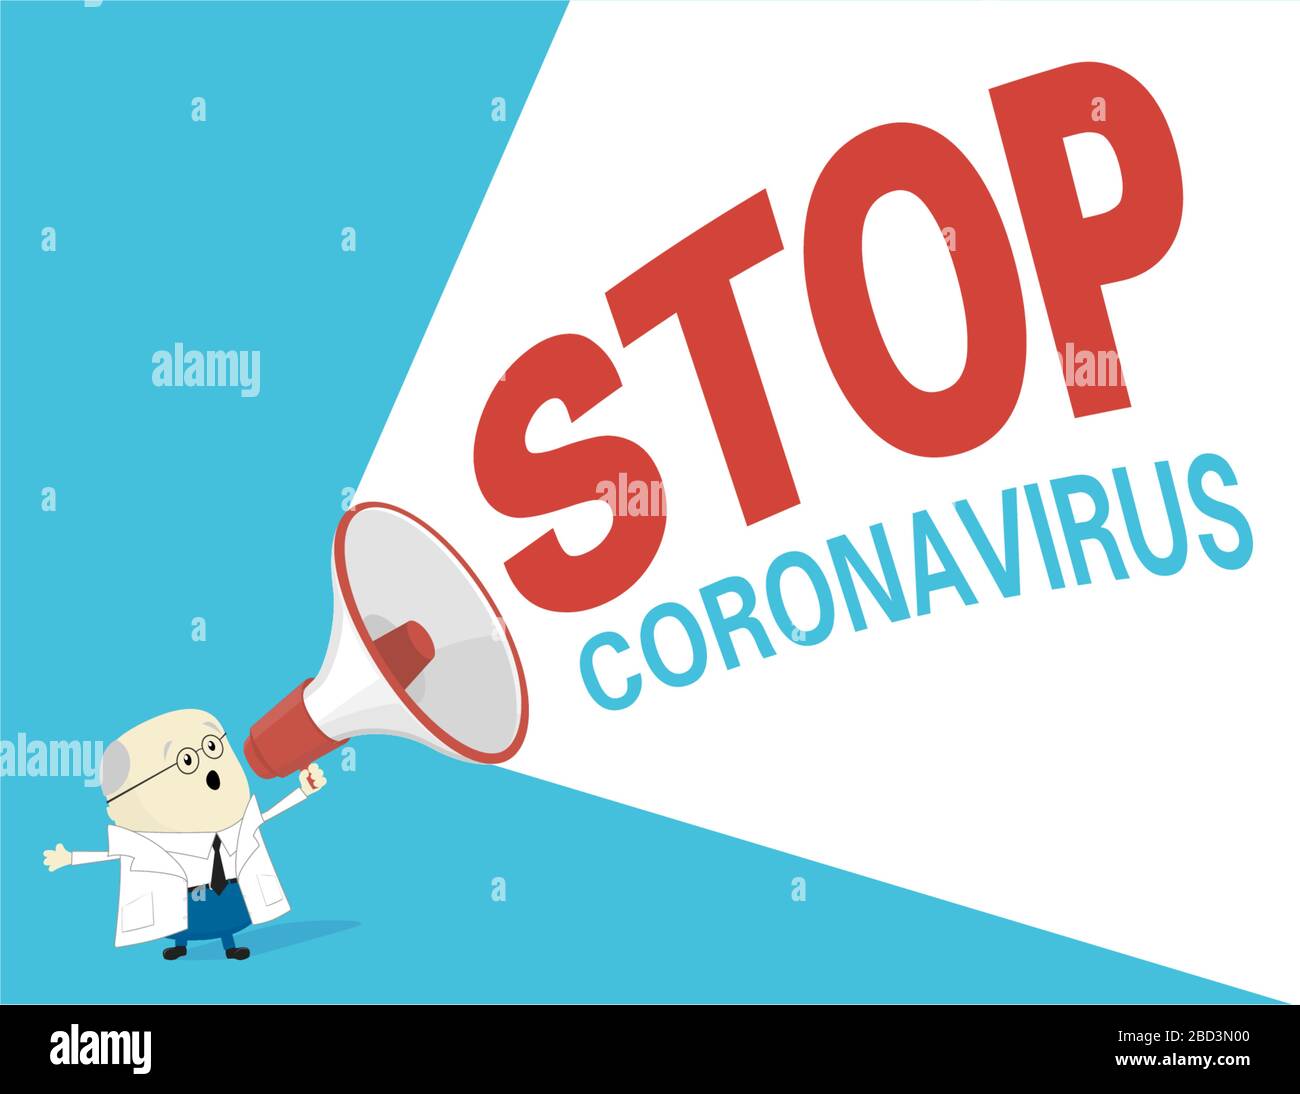 vector illustration of scientist or doctor in white coat shouting through megaphone the quote: stop coronavirus. Coronavirus quarantine motivational p Stock Vector